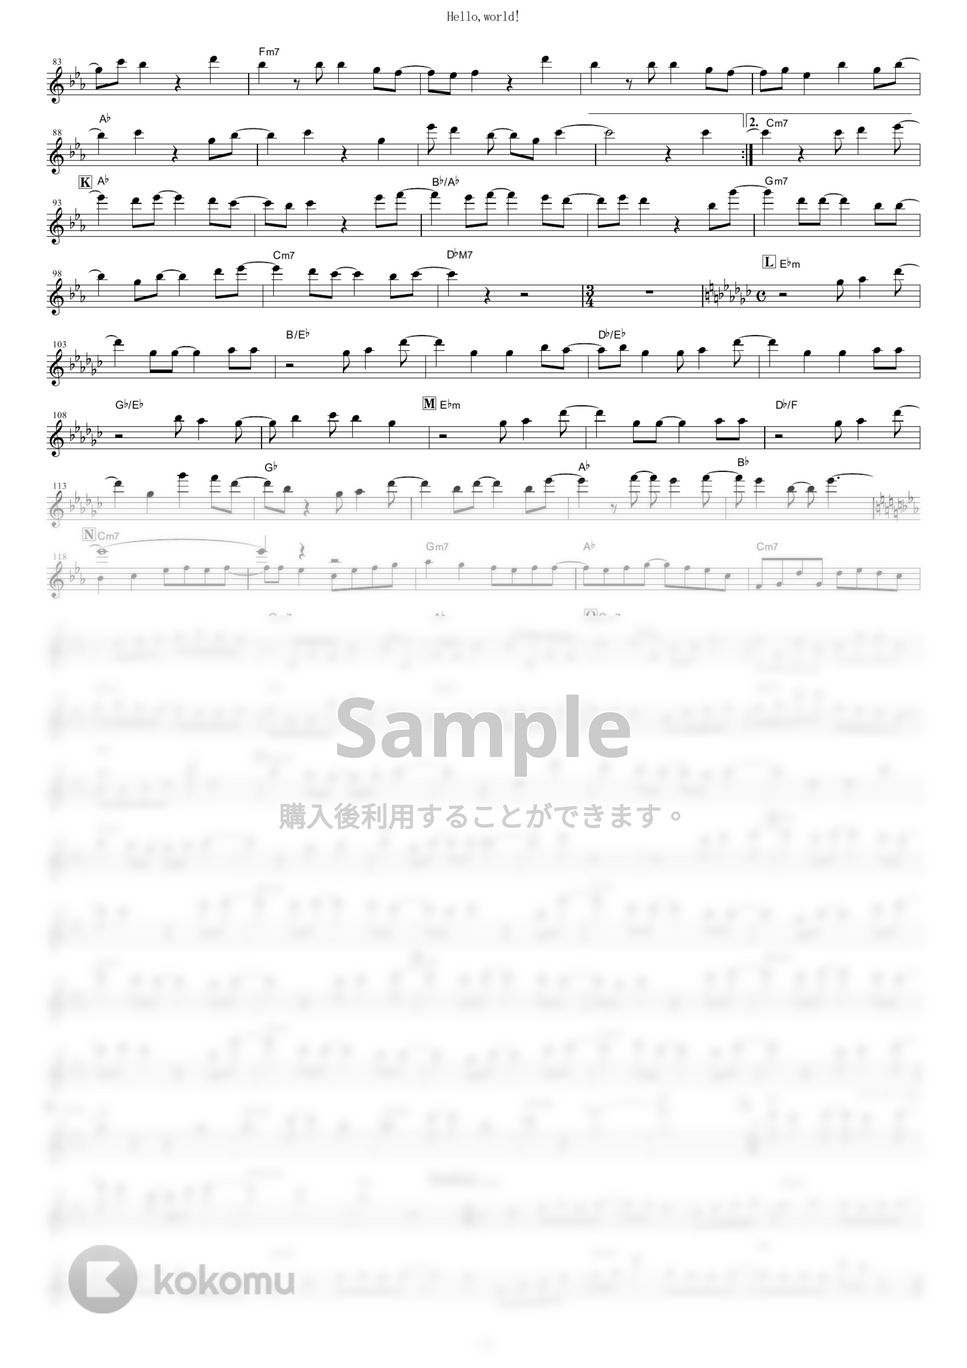 BUMP OF CHICKEN - Hello,world! (『血界戦線』 / in C) by muta-sax